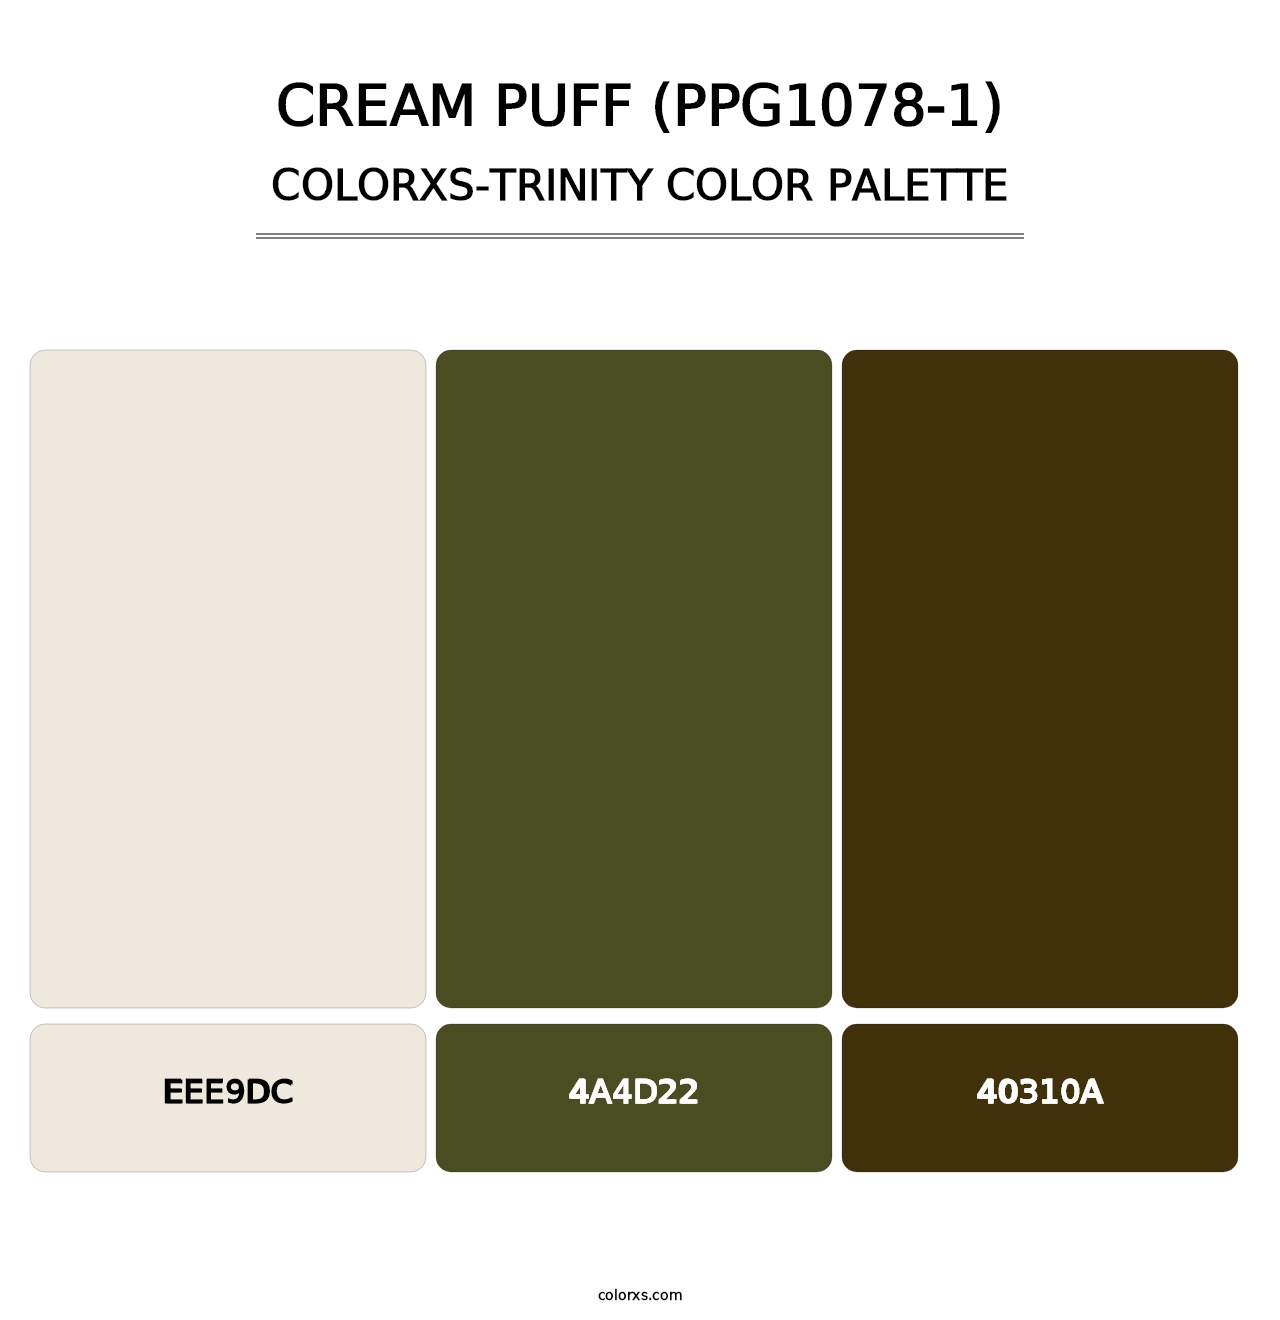 Cream Puff (PPG1078-1) - Colorxs Trinity Palette